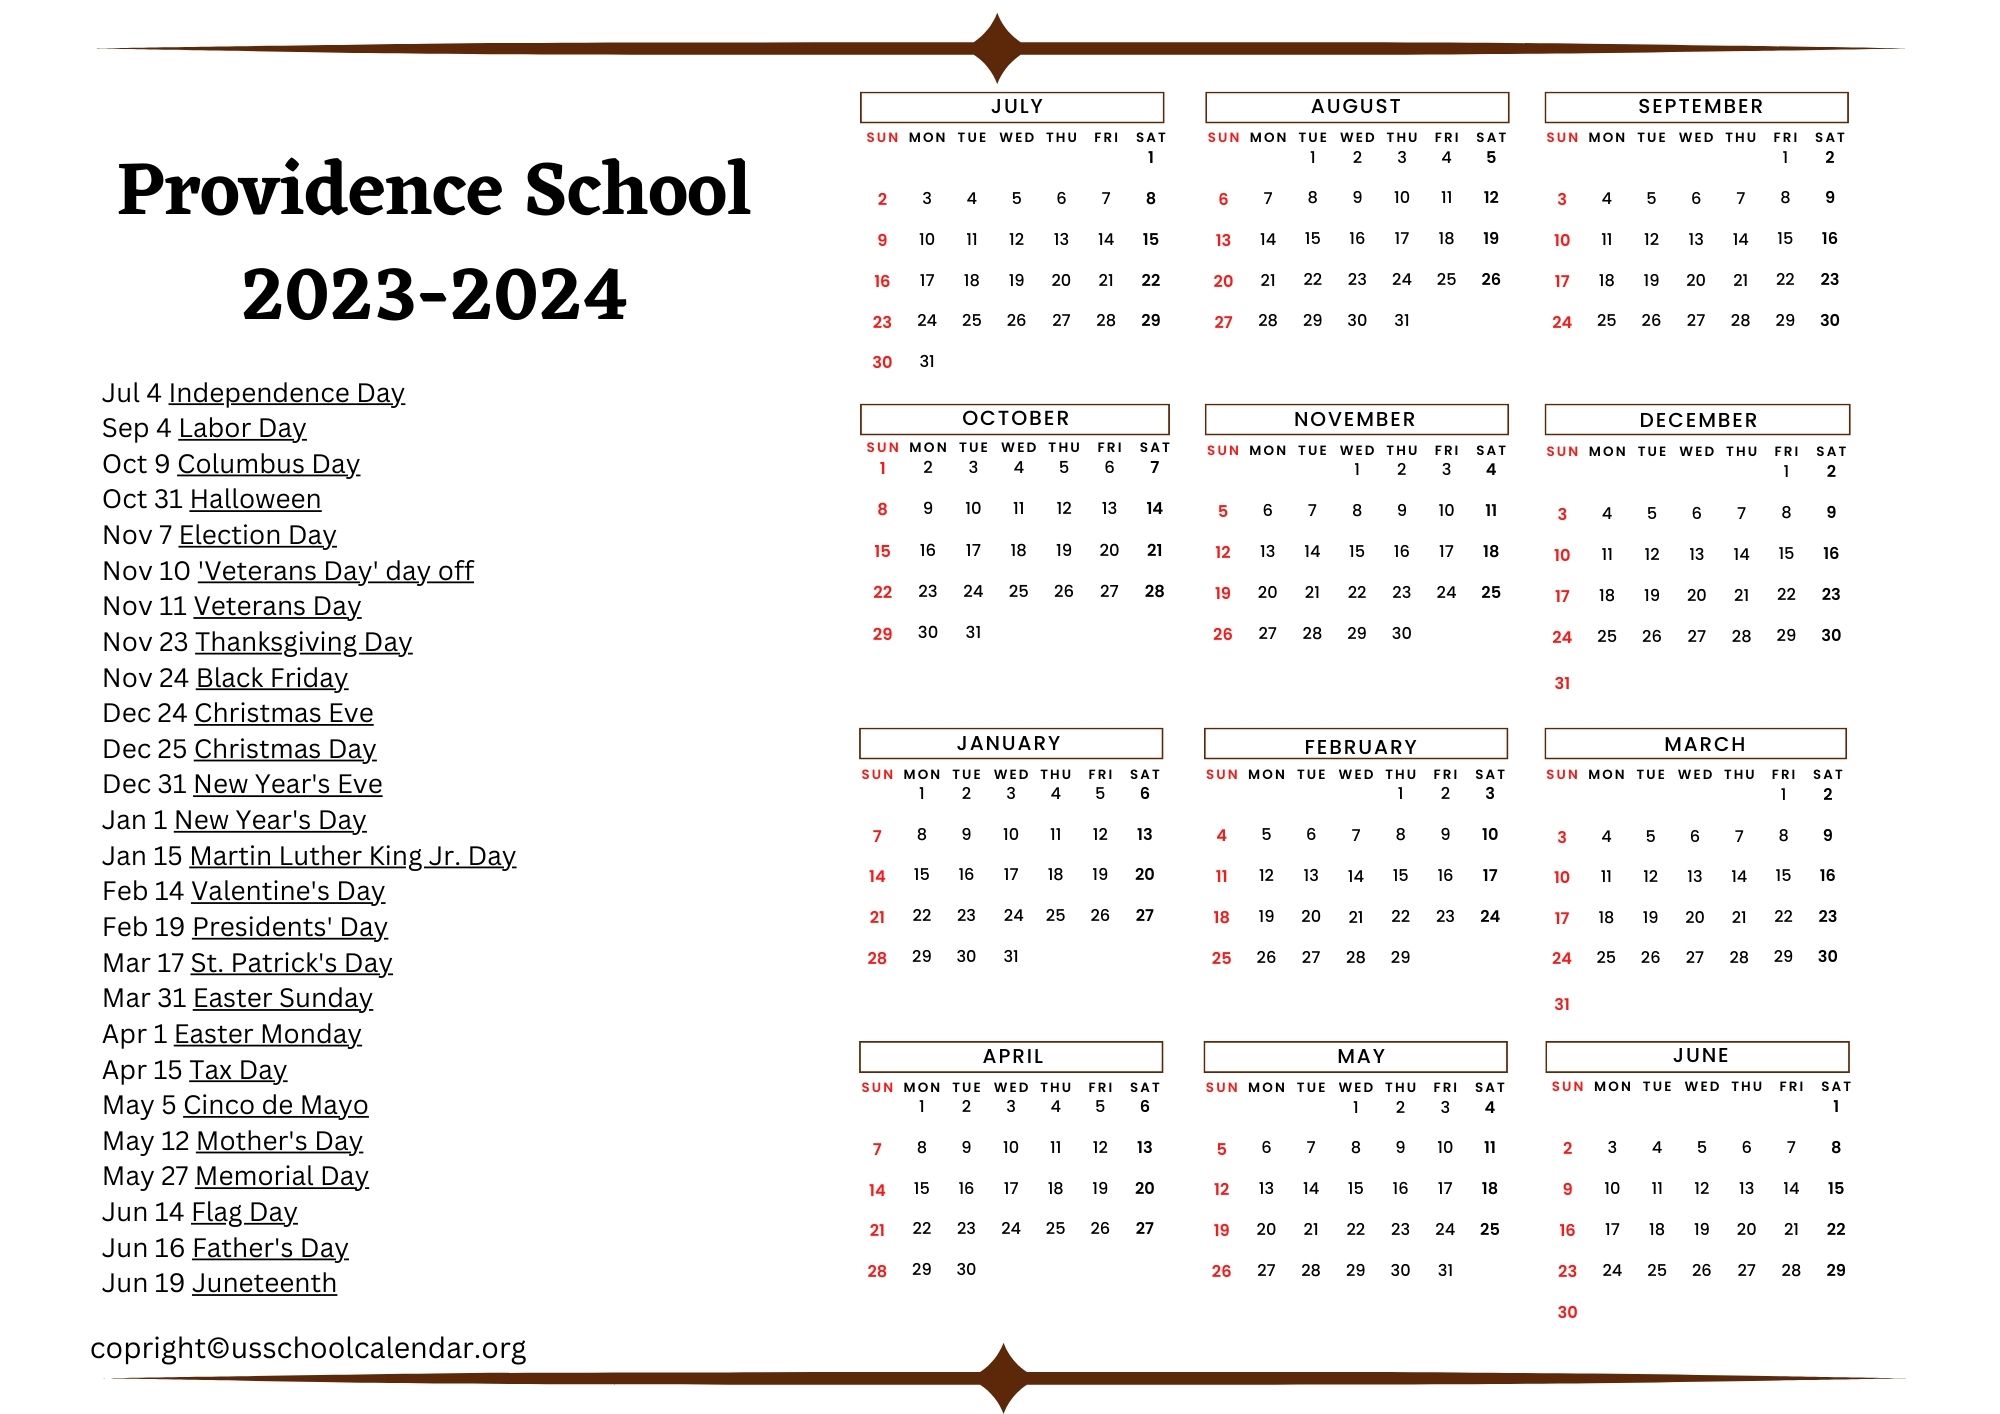 Providence School Calendar with Holidays 2023 2024